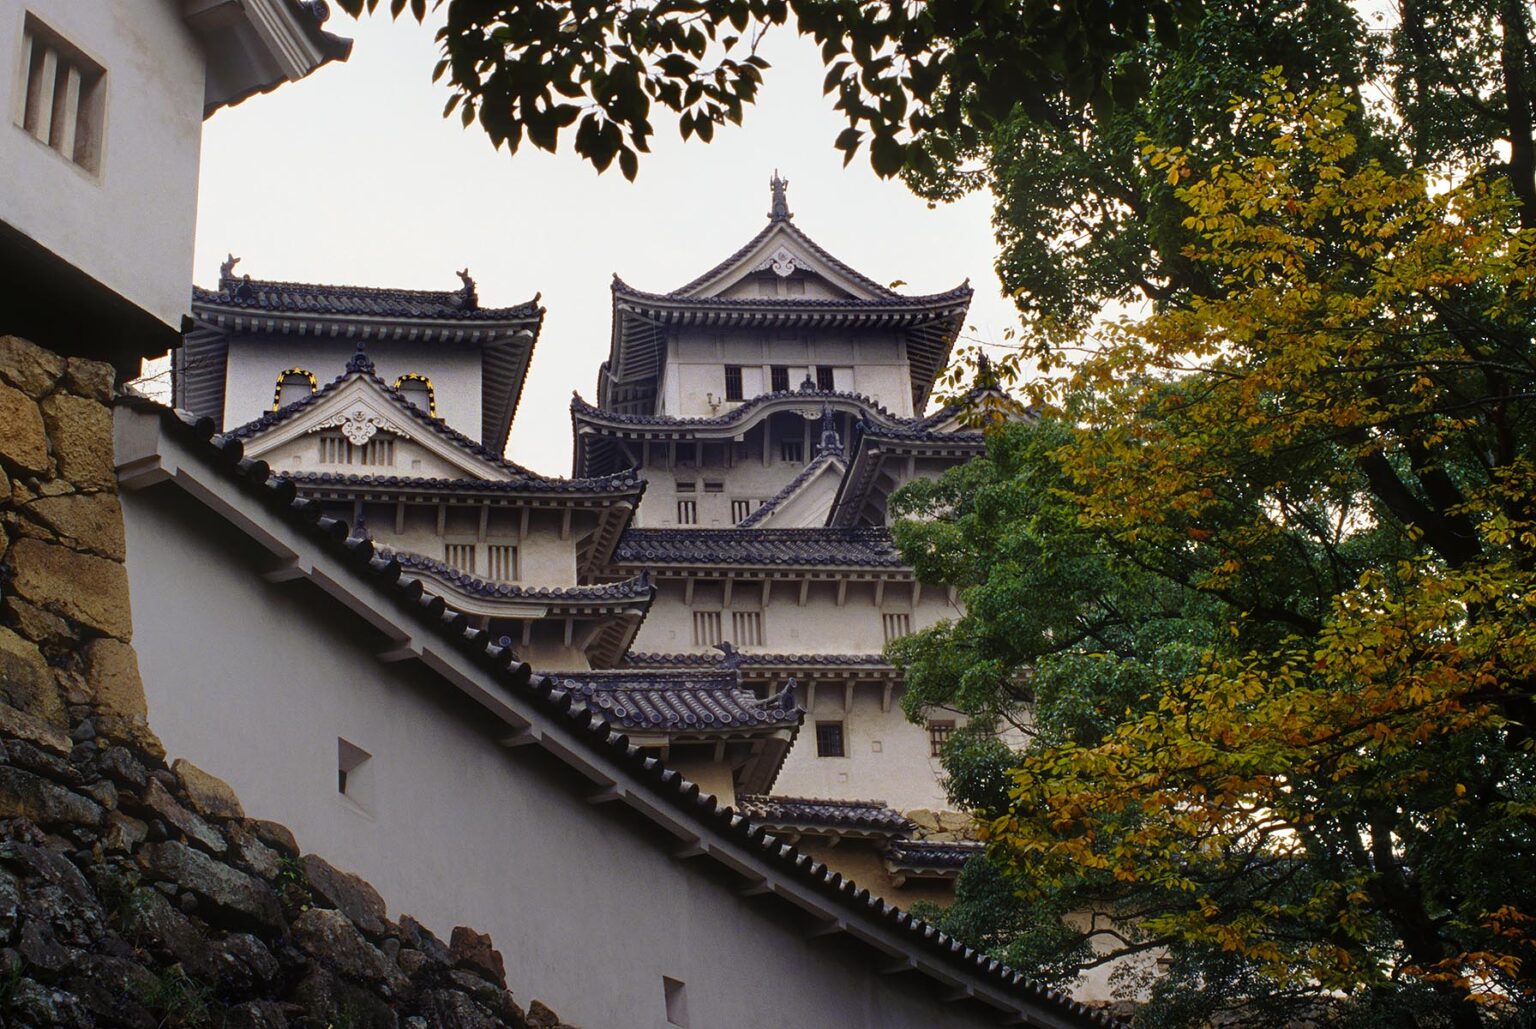 HIMEJI CASTLE was constructed from 1601-1609 by IKEDA TERUMASA - HIMEJI, JAPAN